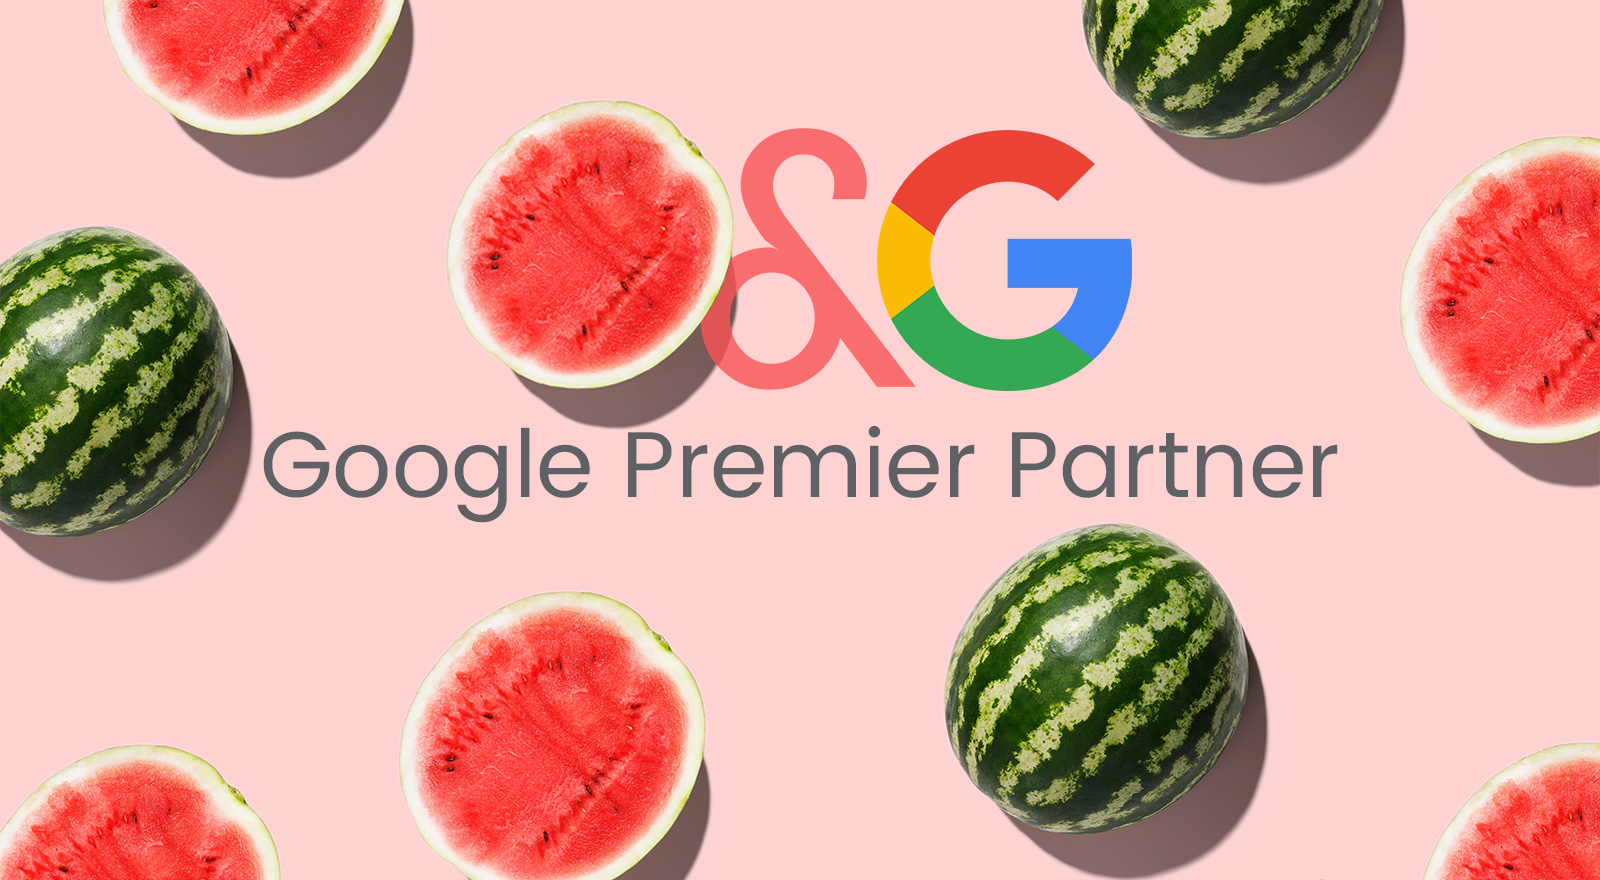 Melon is a Google Premier Partner blog image